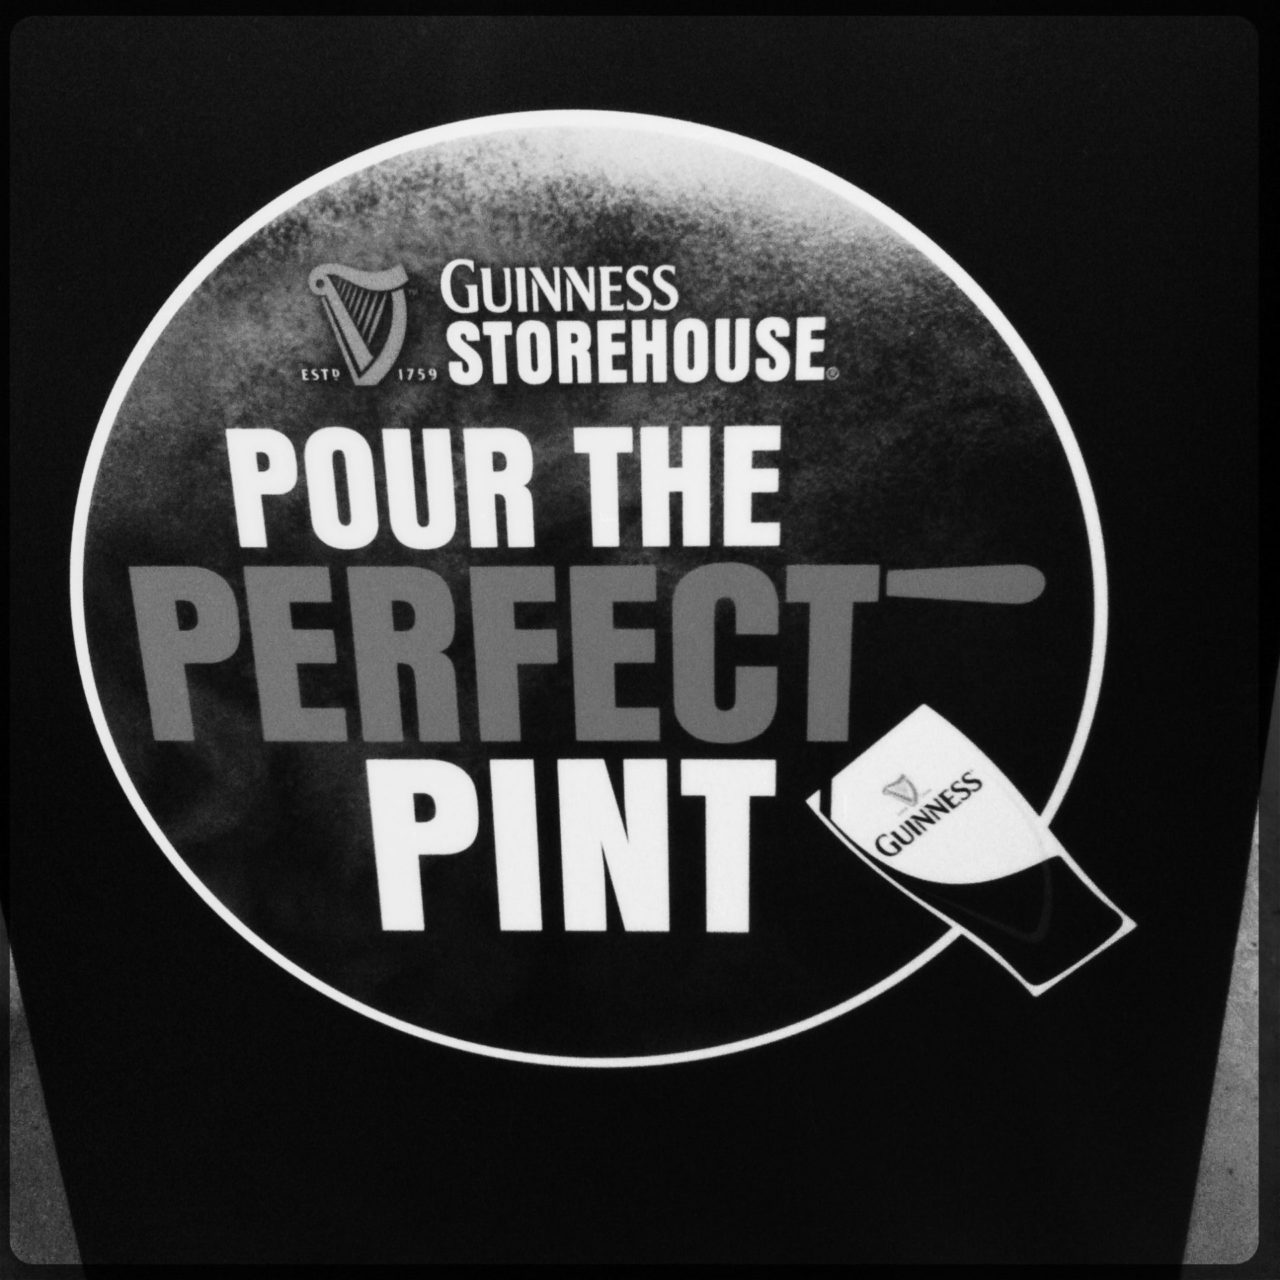 Werbeschild mit der Aufschrift Pour the Perfect Pint im Guinness Storehouse in Dublin